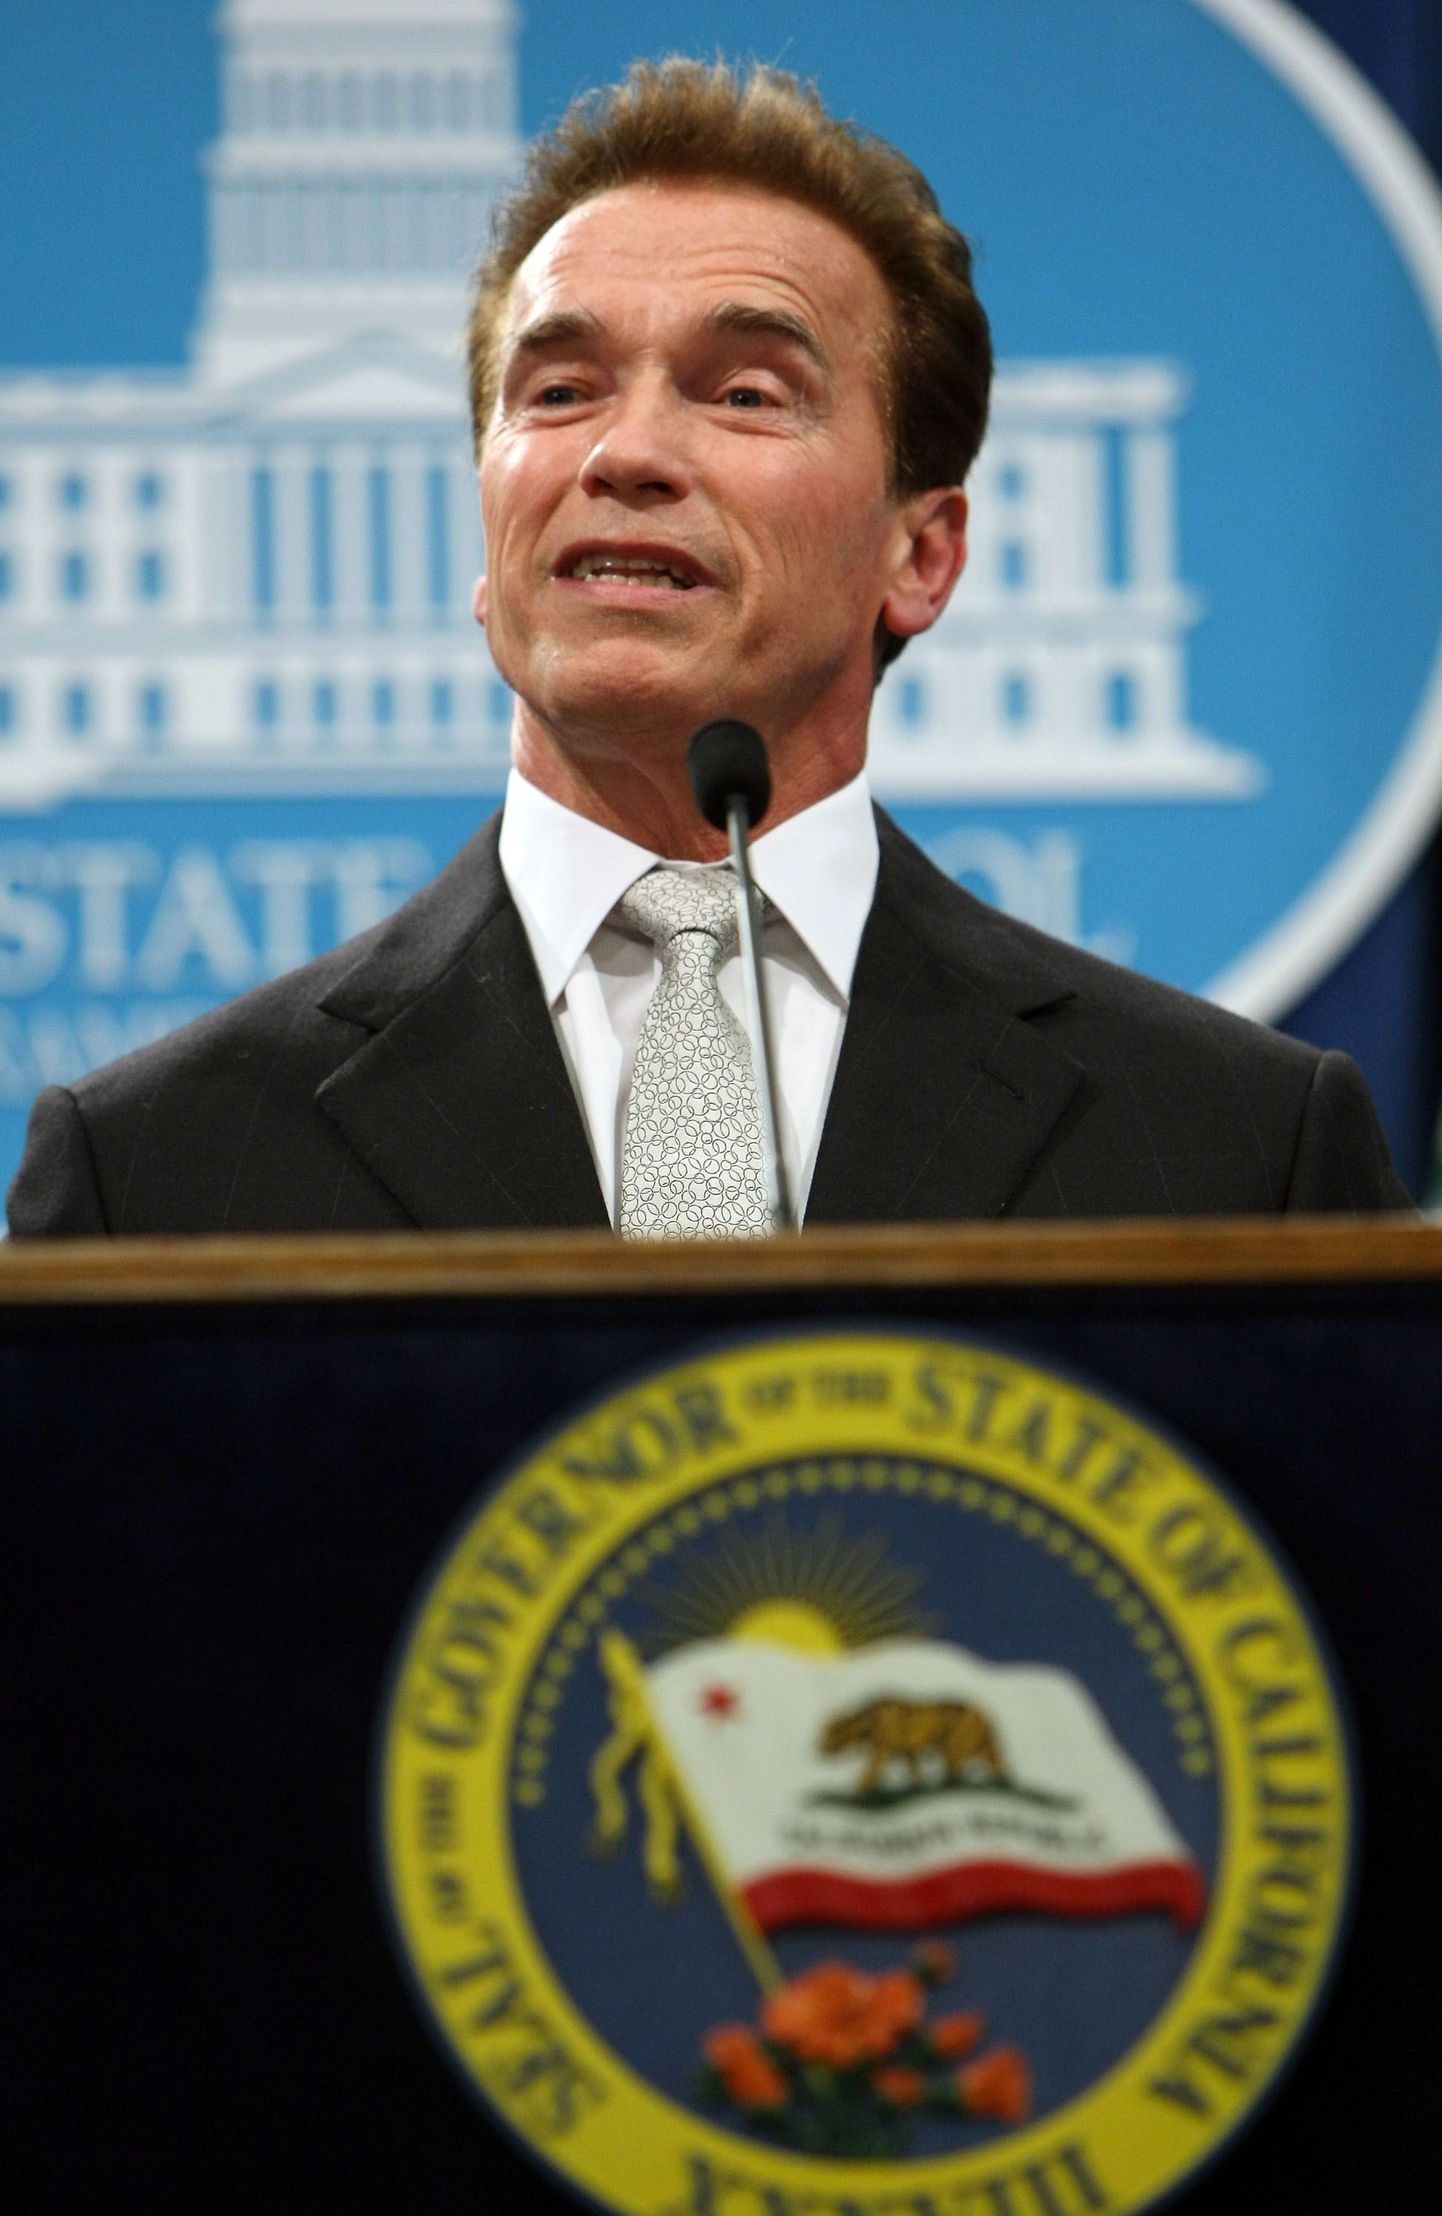 California kuberner Arnold Schwarzenegger